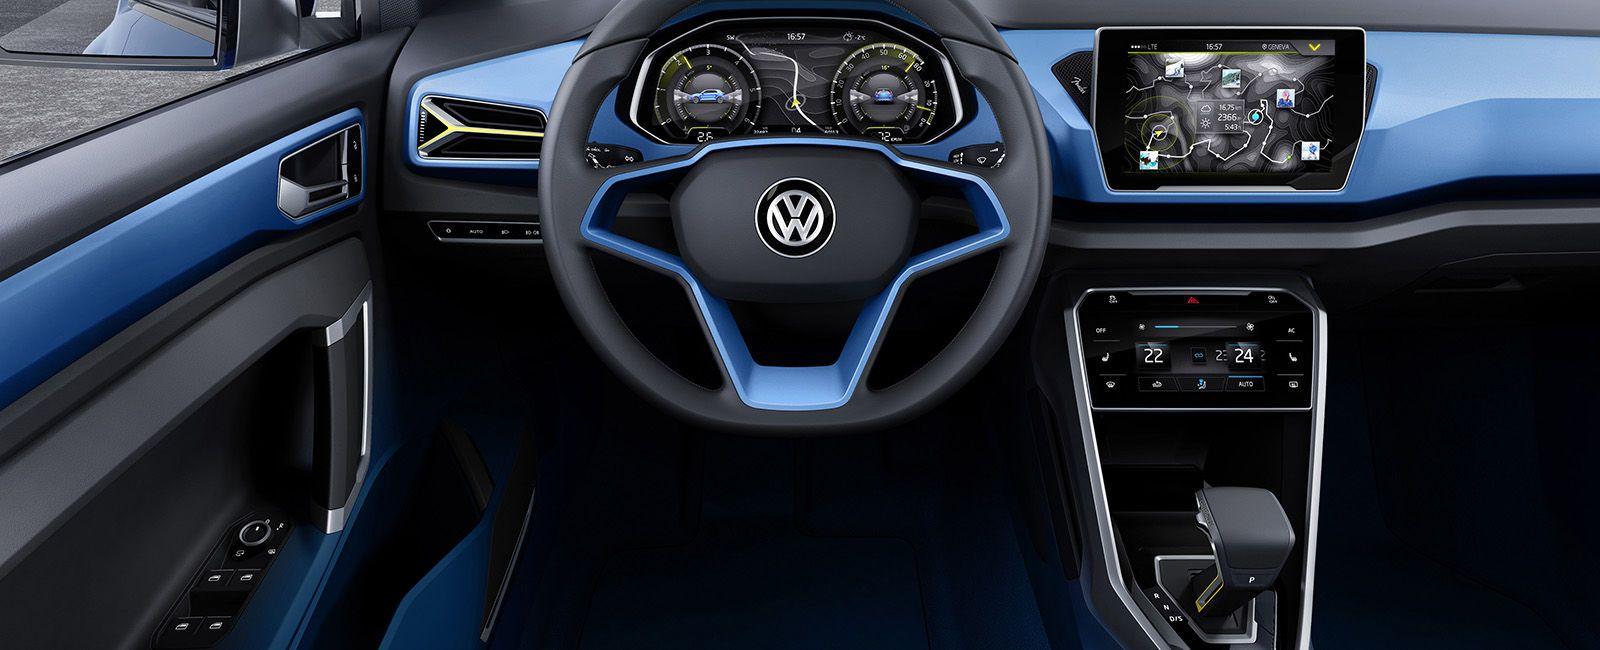 Volkswagen T Cross Interior. Car HD Wallpaper, Prices Review